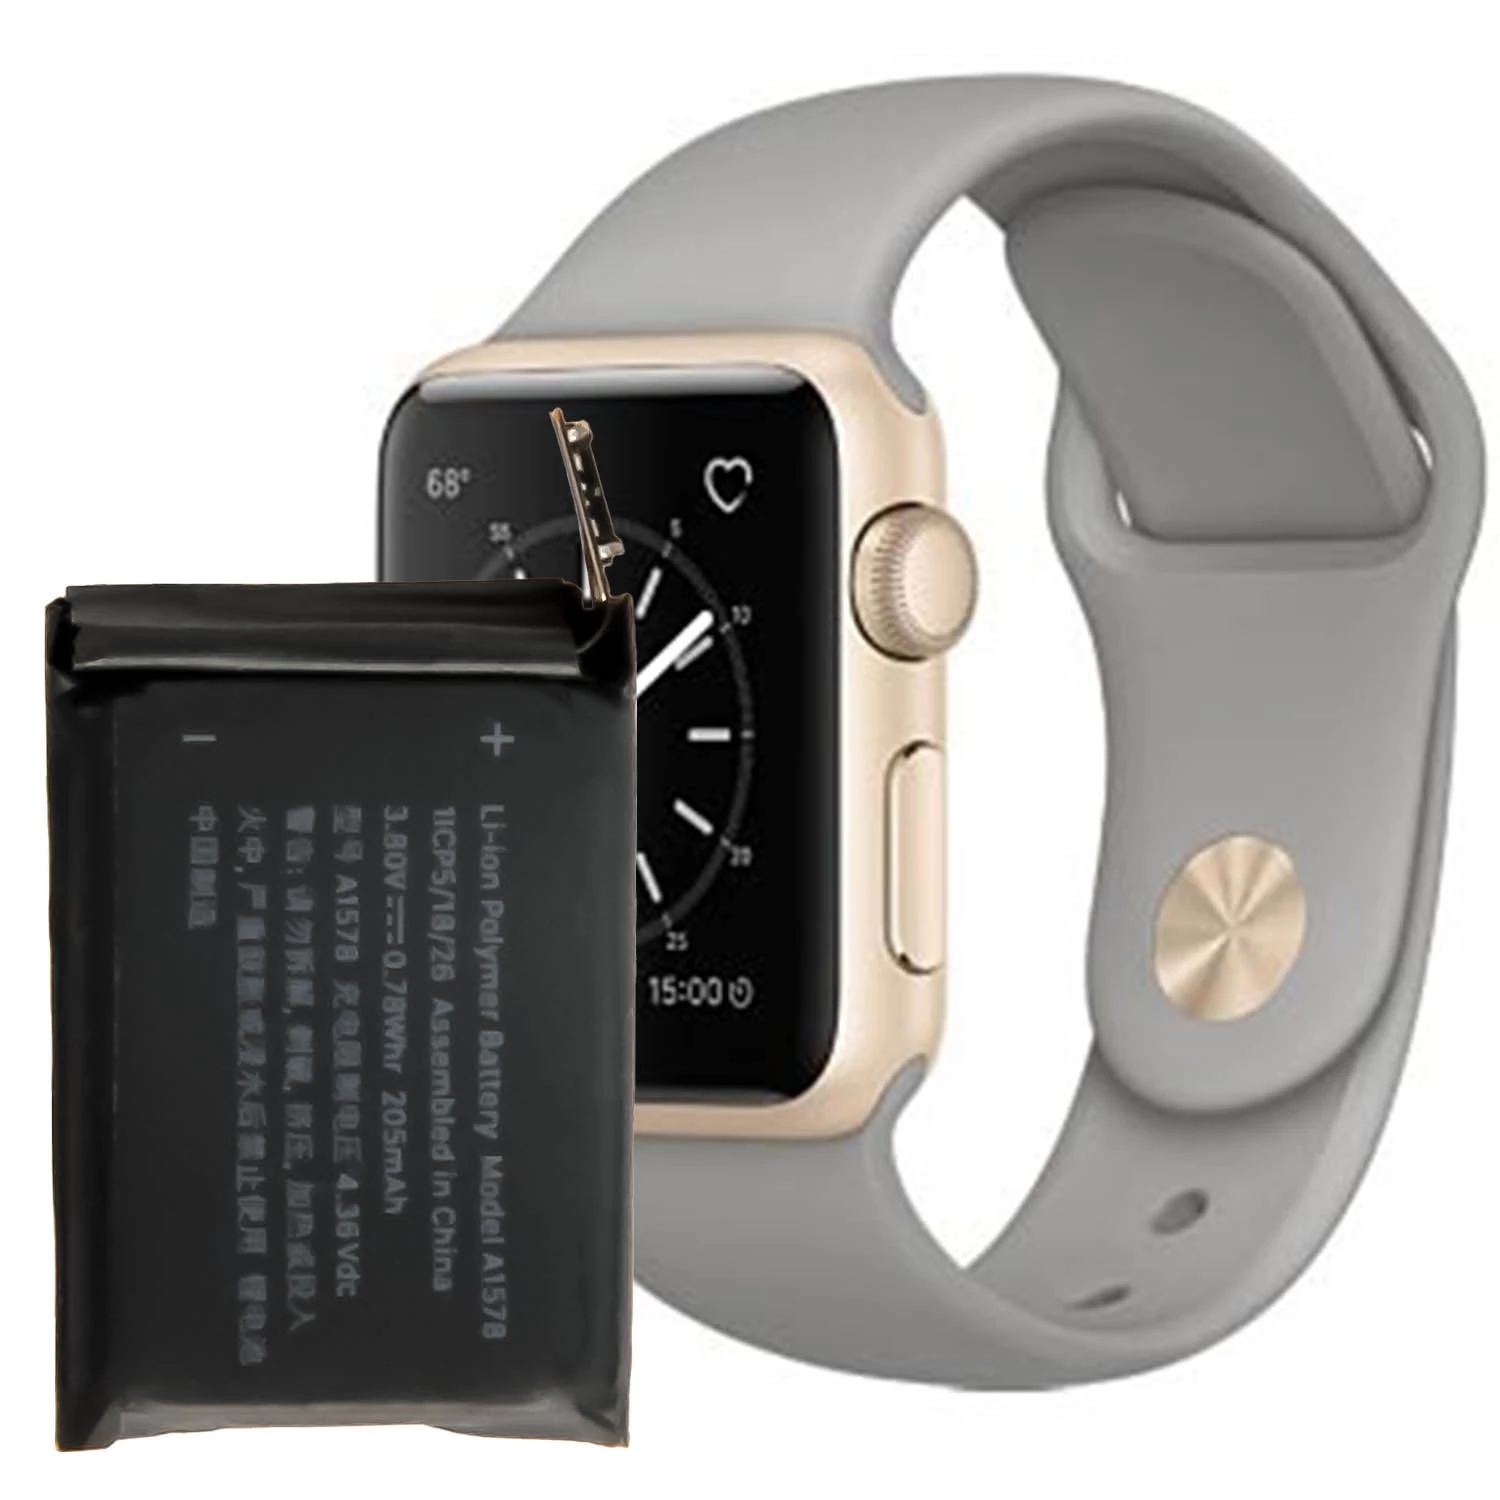 Apple Watch A1578 Battery